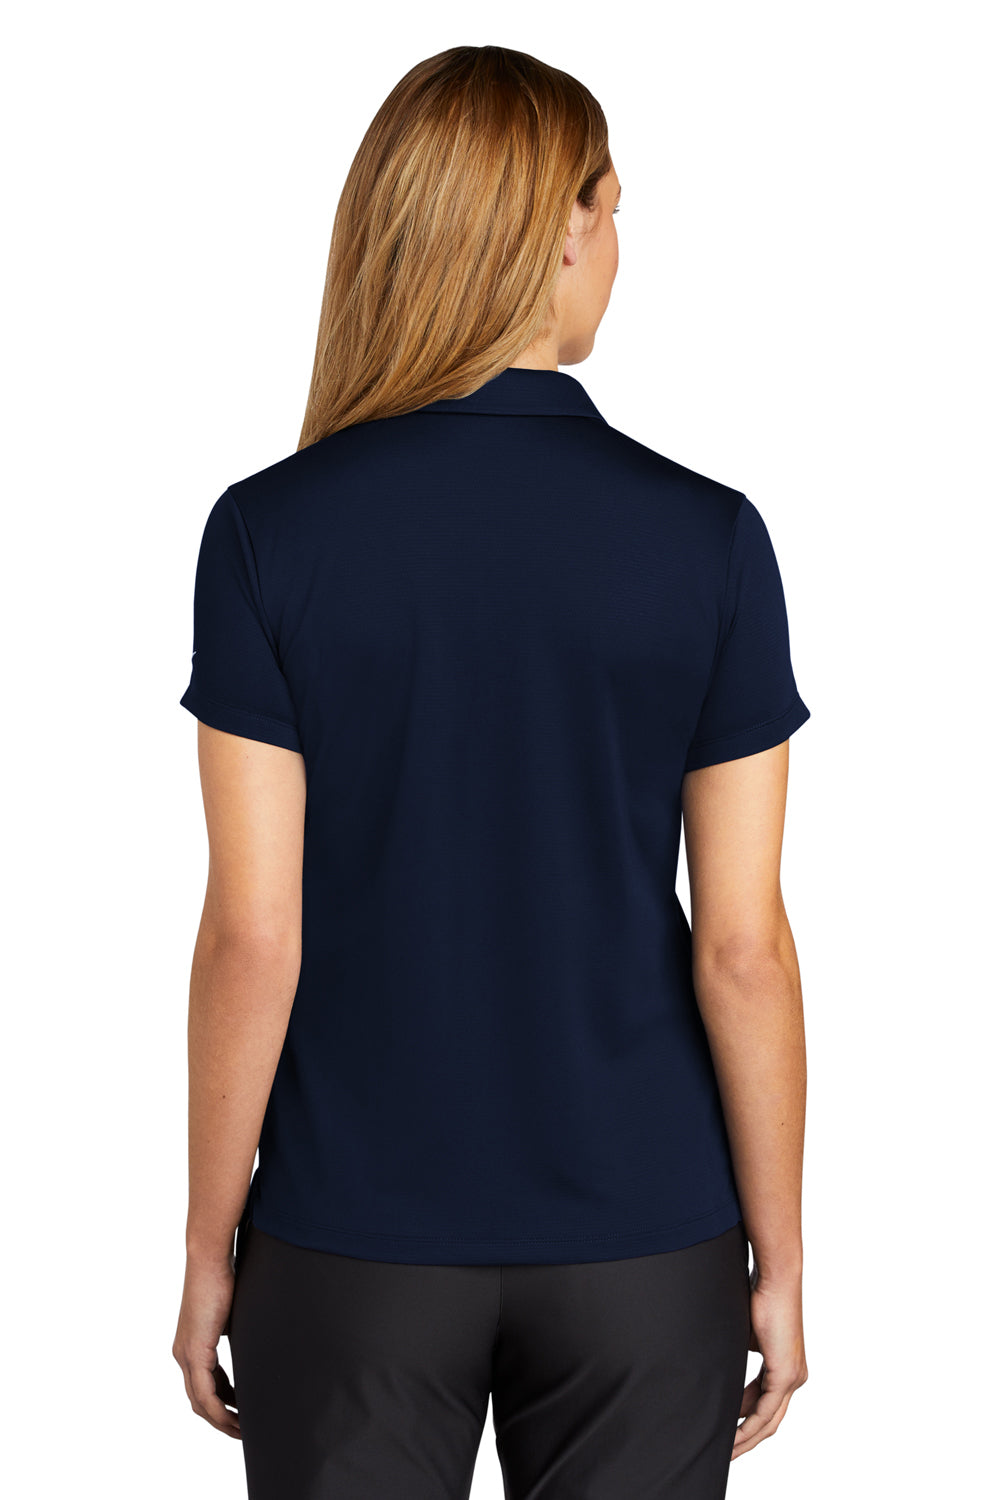 Nike NKBV6043 Womens Essential Dri-Fit Moisture Wicking Short Sleeve Polo Shirt Midnight Navy Blue Model Back